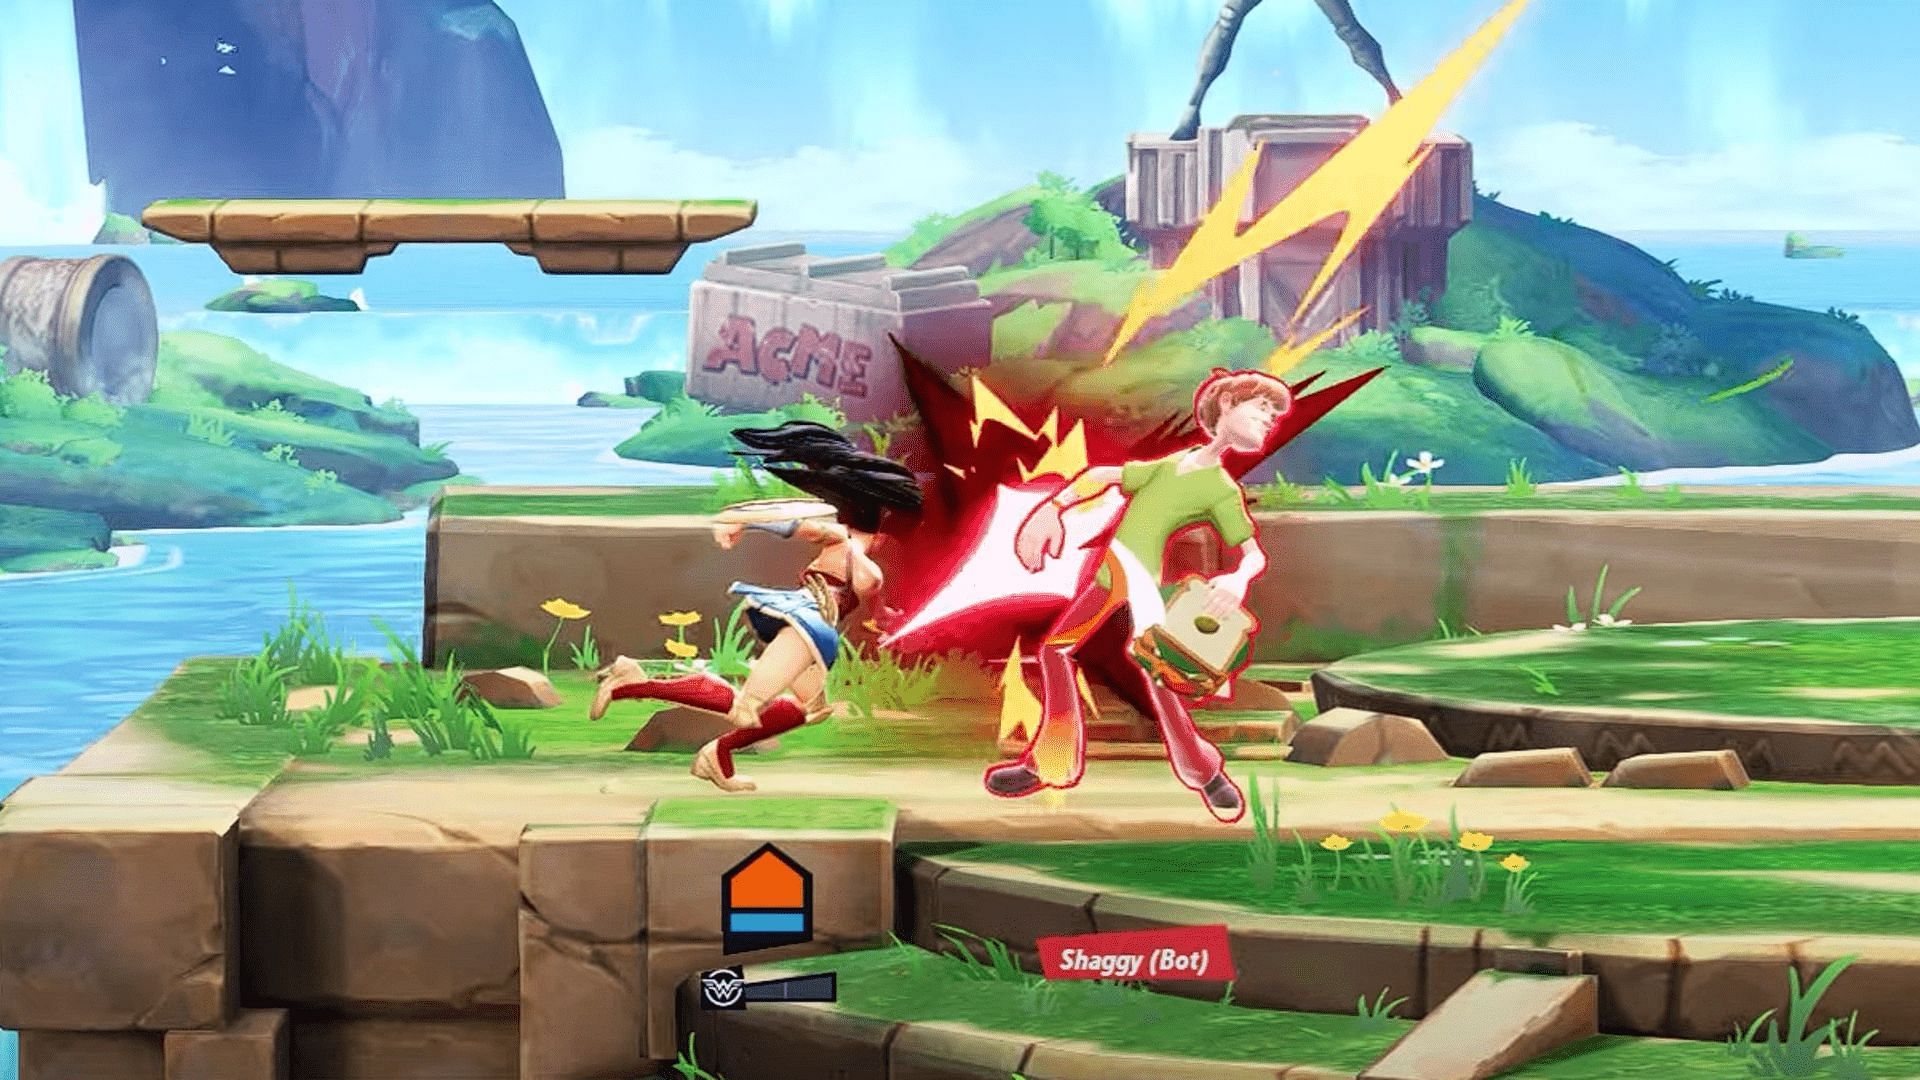 Attacks from the princess of Amazon (Image via Warner Bros. Games)